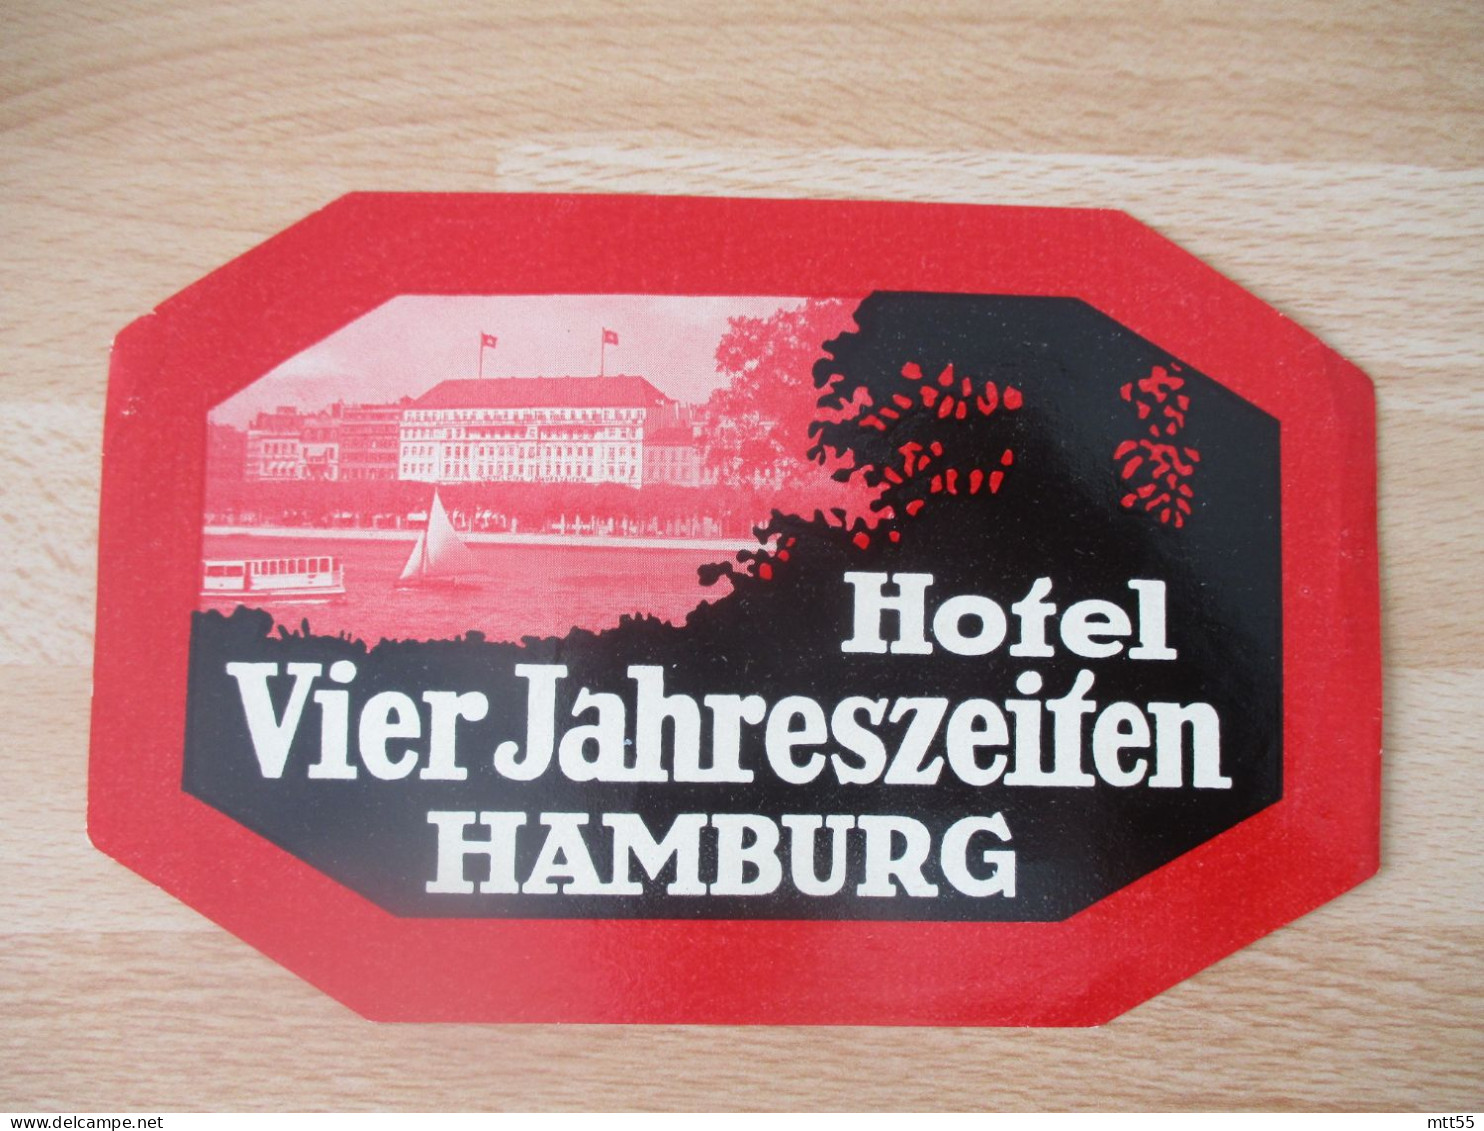 HAMBURG HAMBOURG HOTEL VIER JAHNRESZEIIEN  ETIQUETTE HOTEL - Etiquetas De Hotel